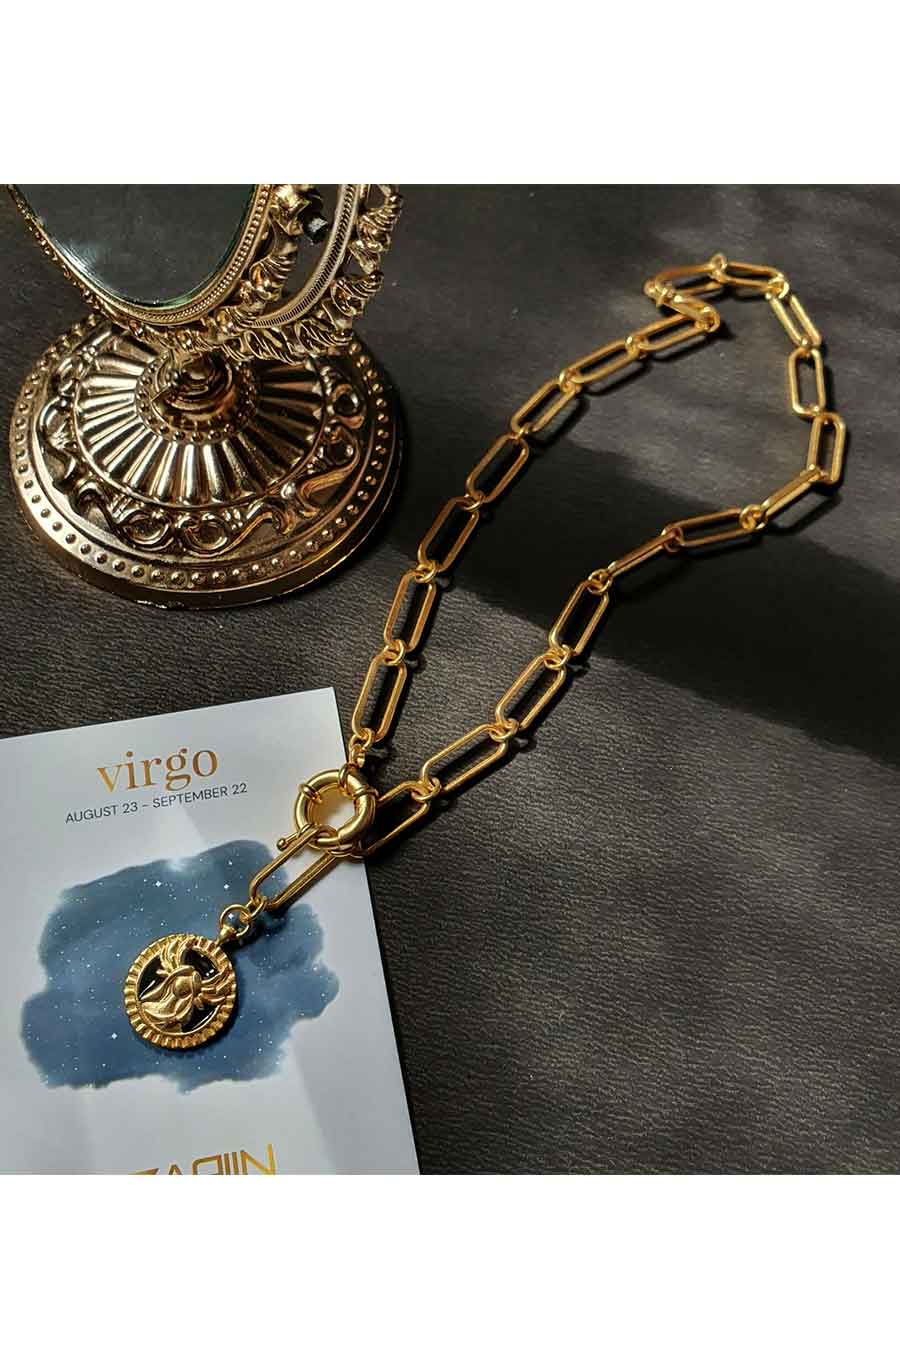 Soul of the Virgin - Virgo Necklace